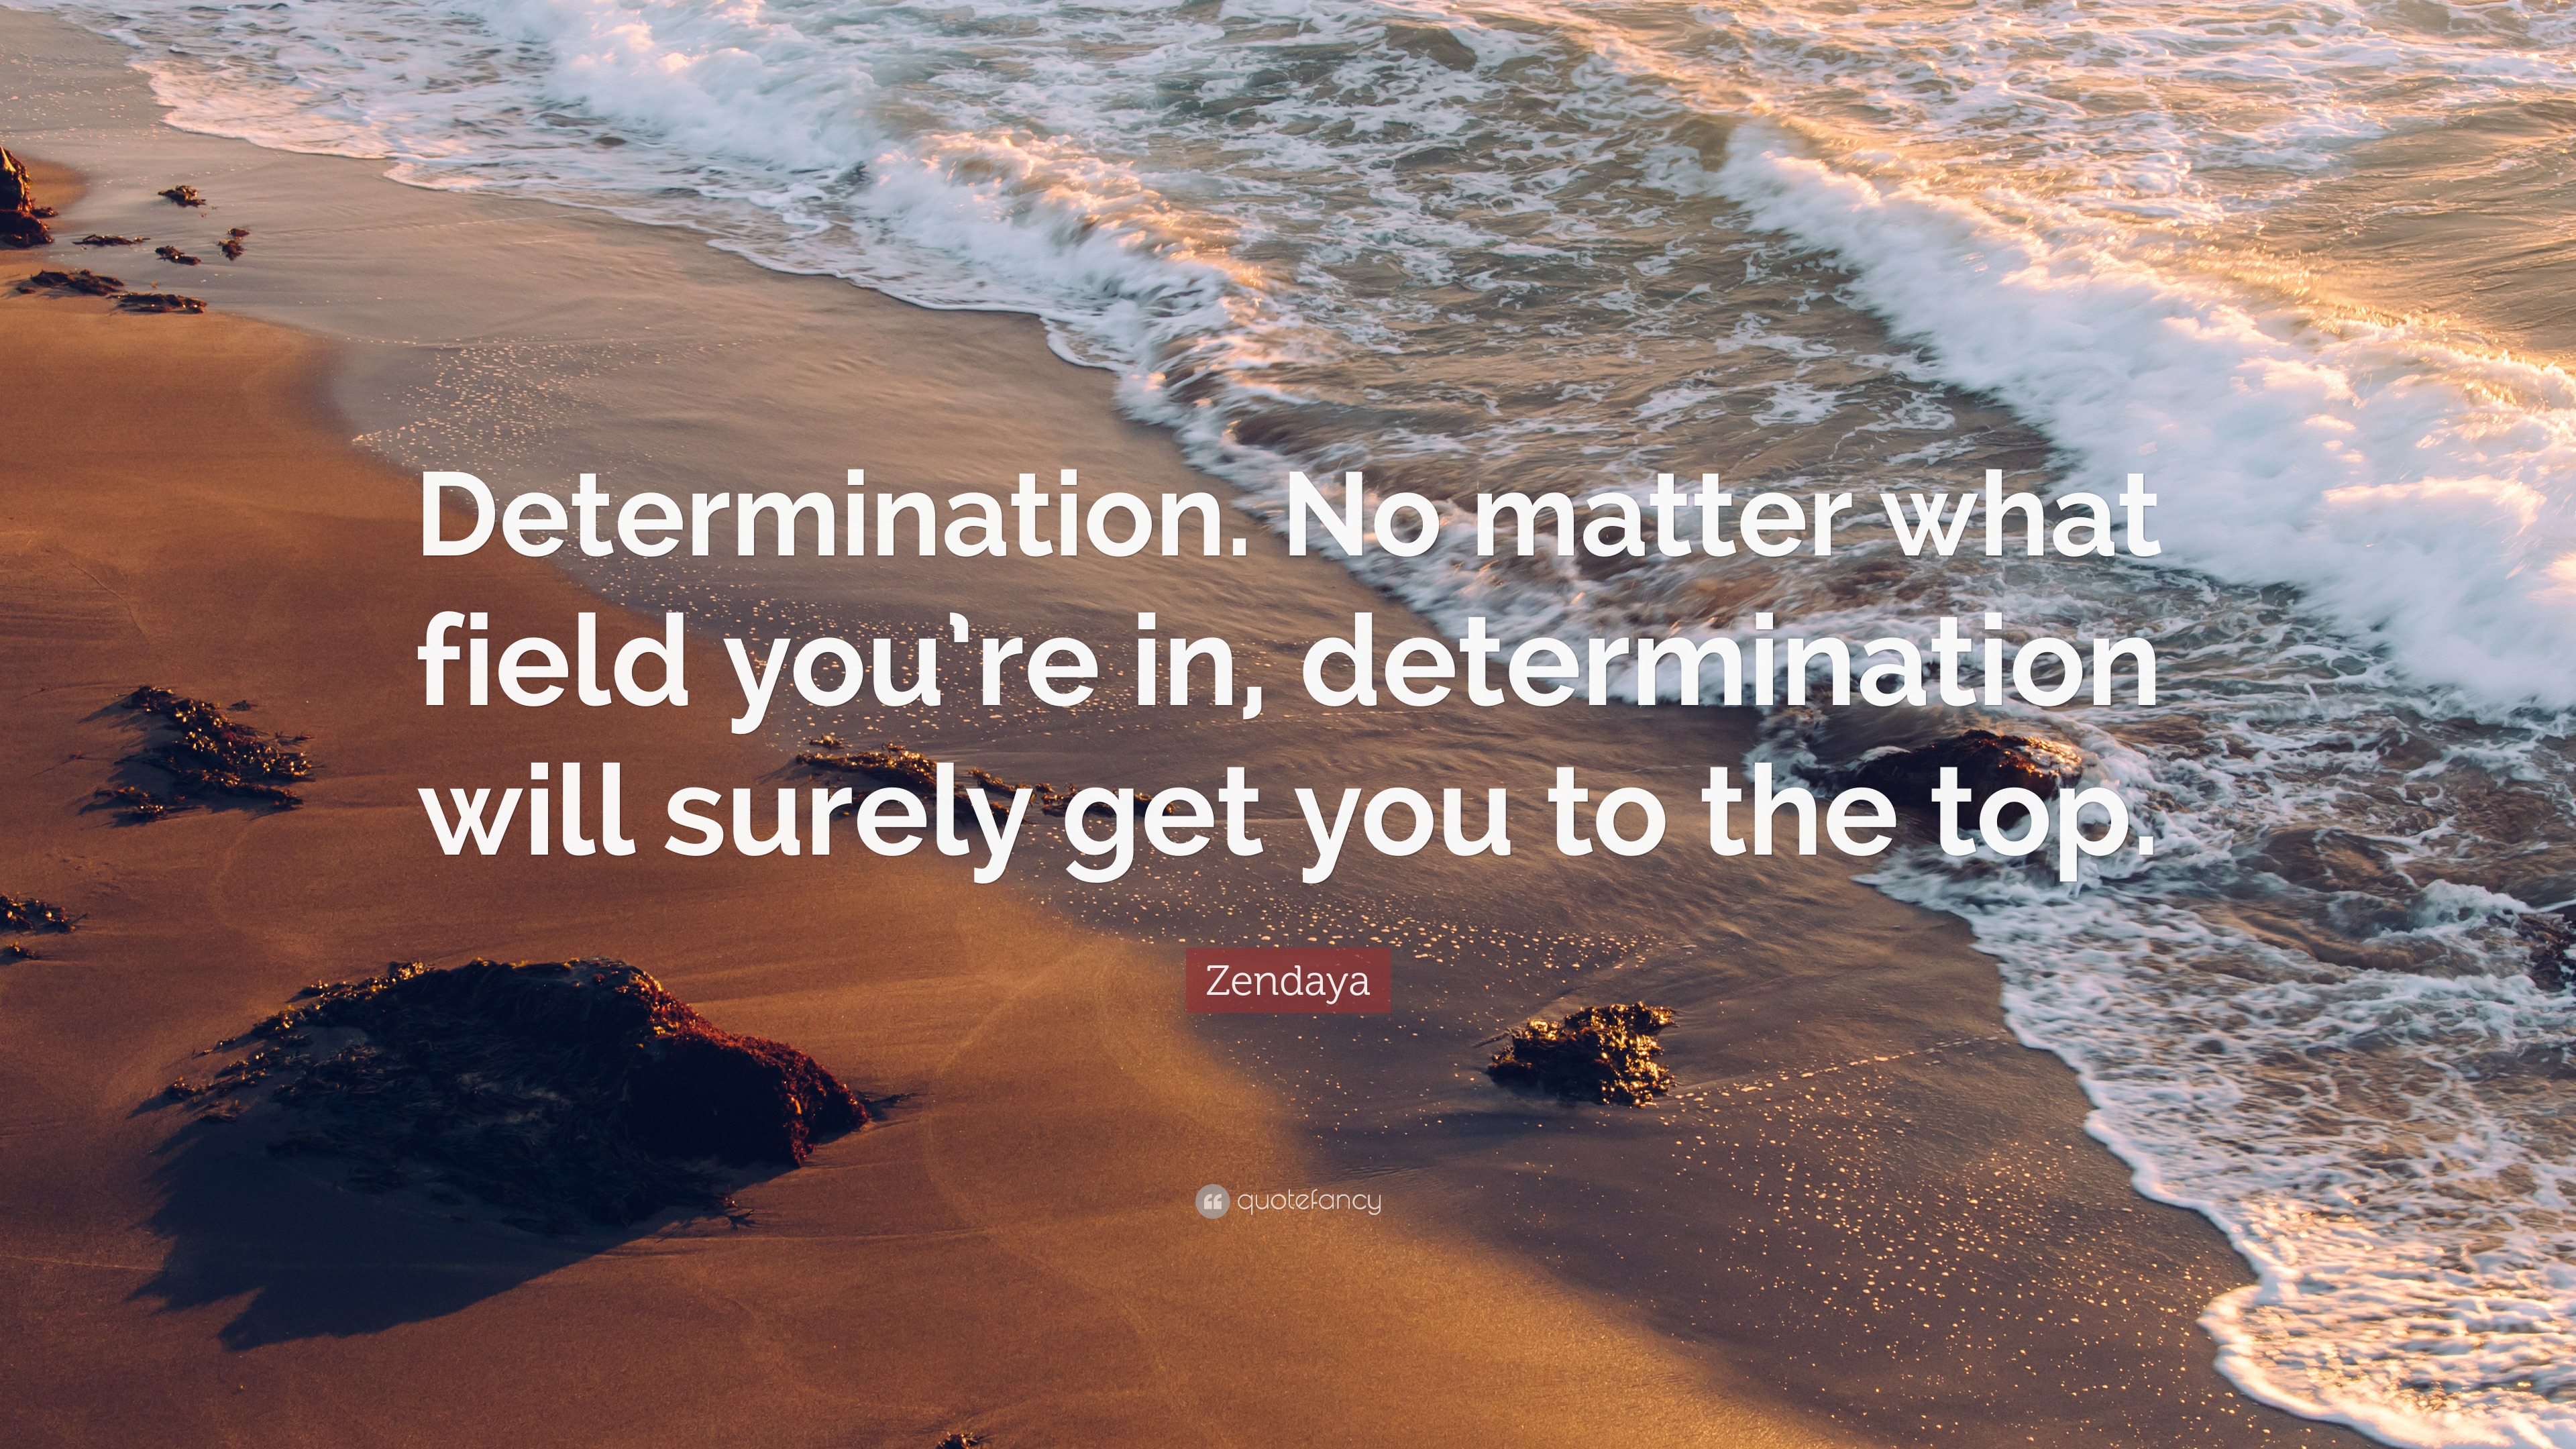 Zendaya Quote: “Determination. No matter what field you’re in